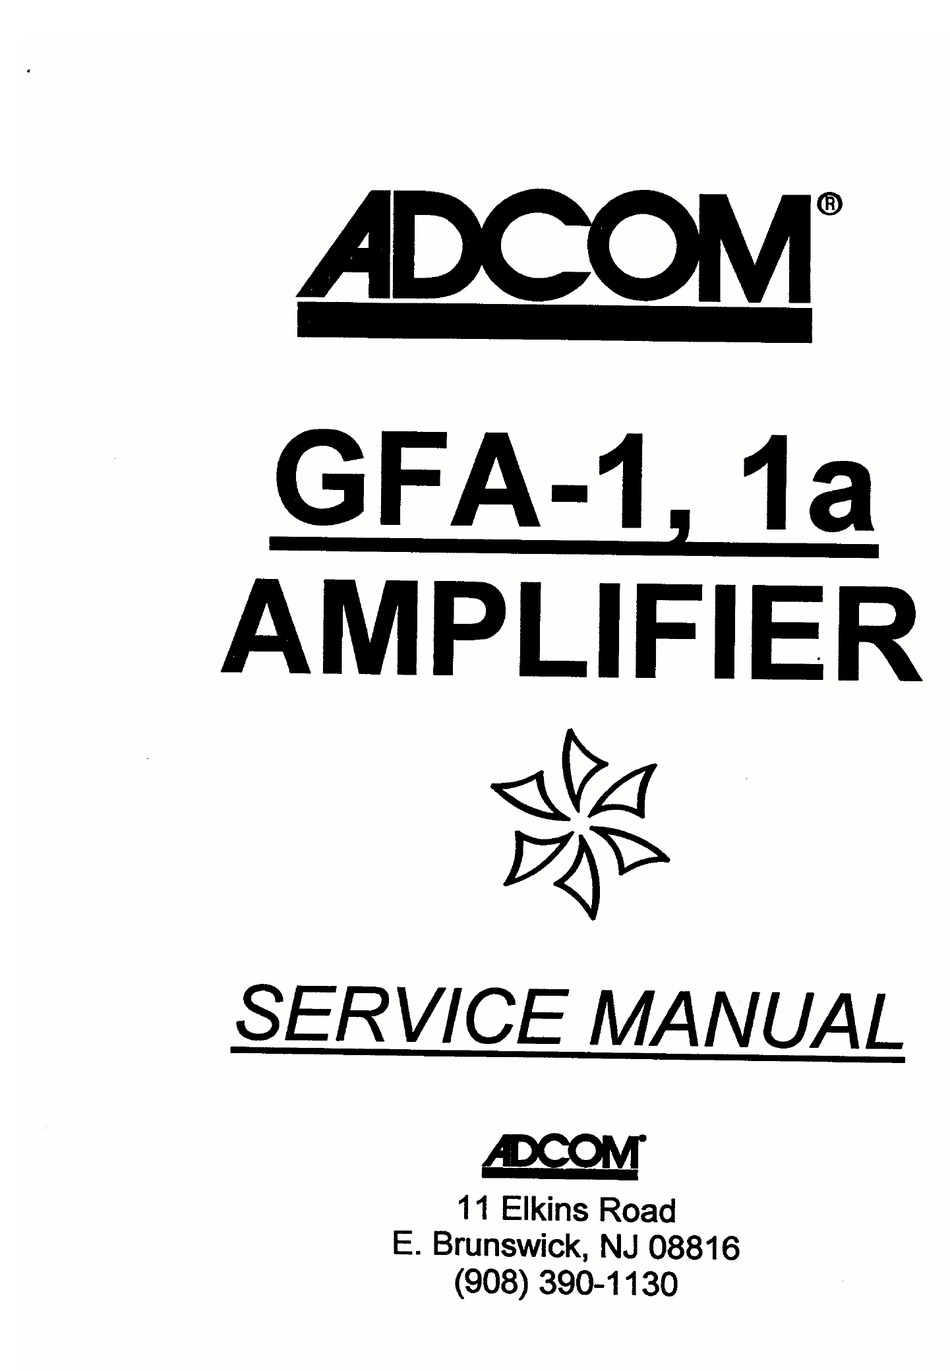 Adcom GFA-6000 Amplifier  Service Manual *Original* 